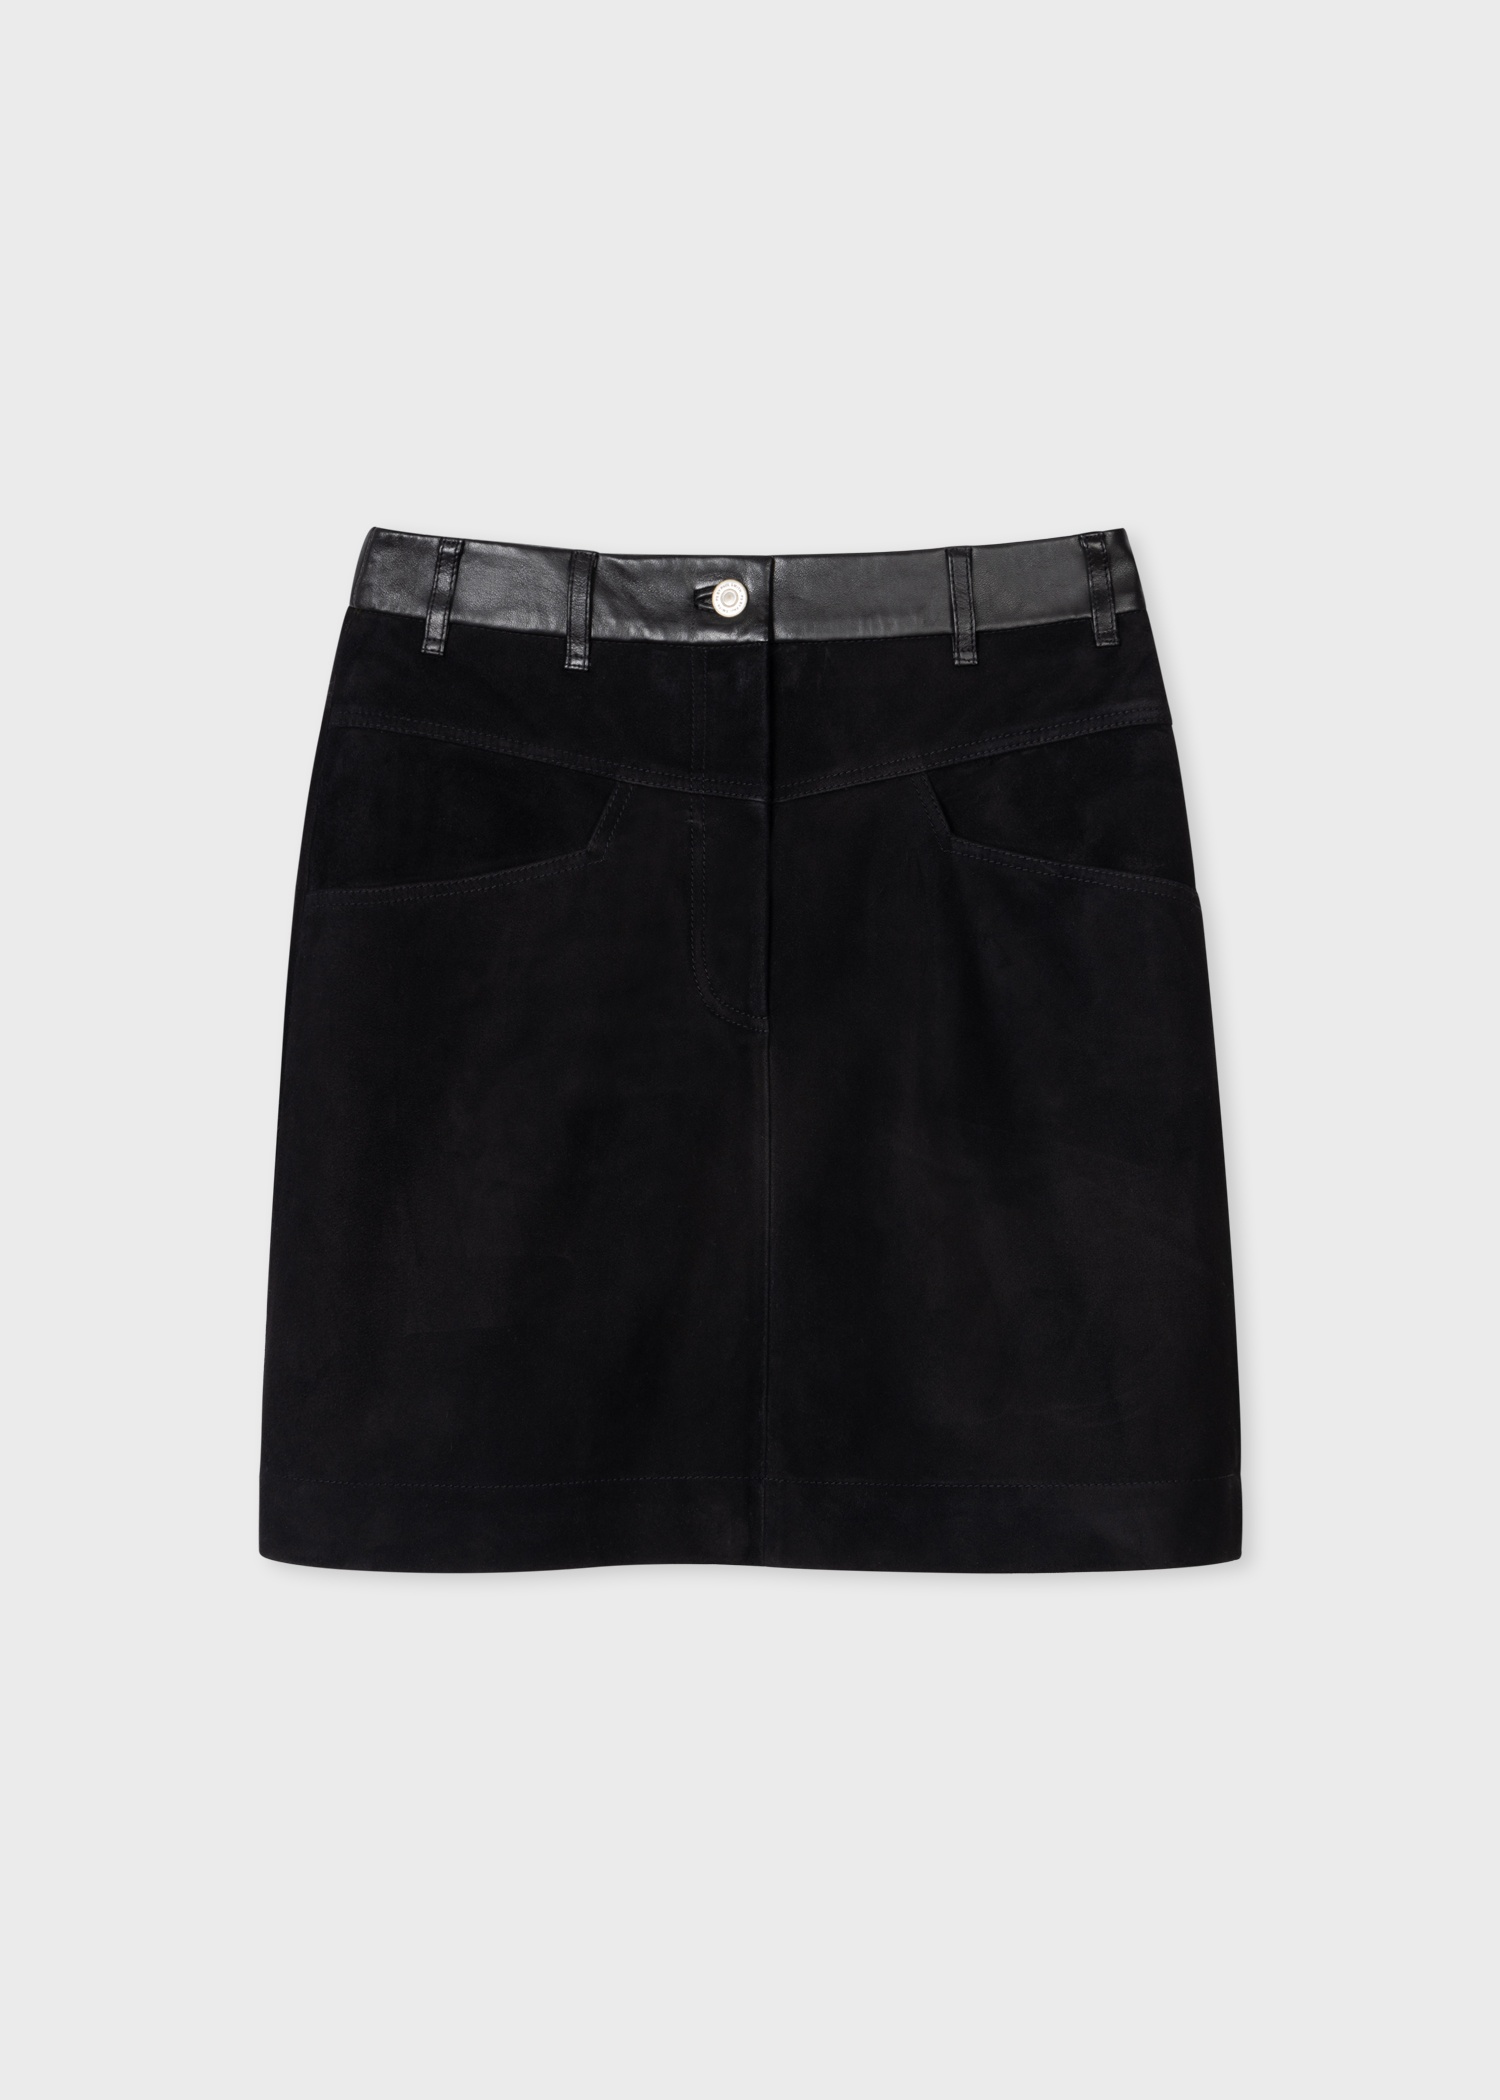 Women's Black Suede Contrasting Short Skirt - 1